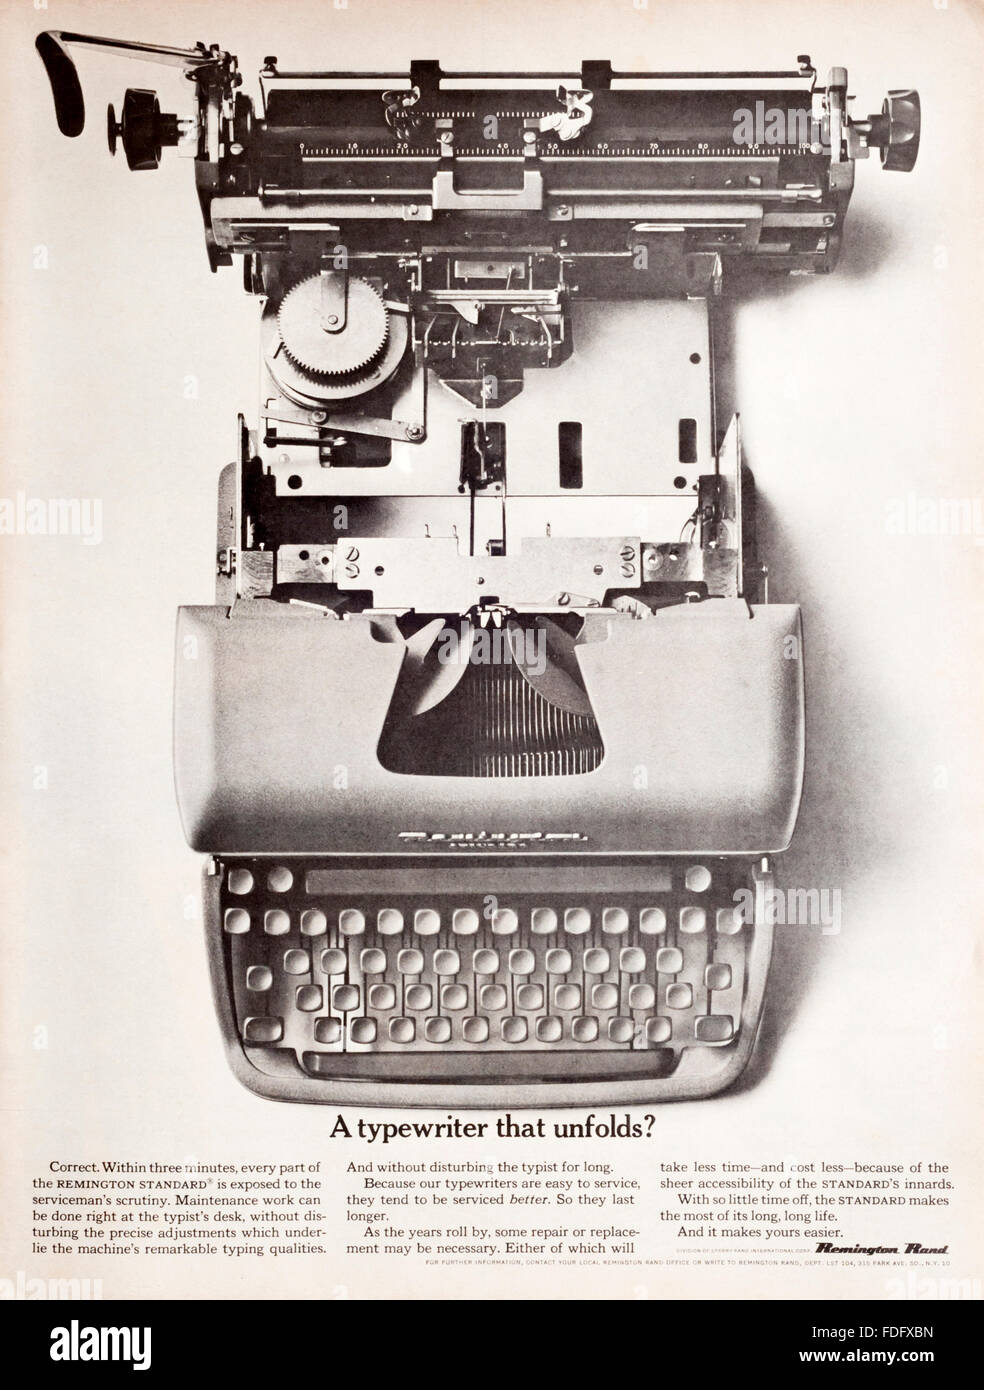 1960s magazine advertisement advertising Remington Rand typewriters. Stock Photo